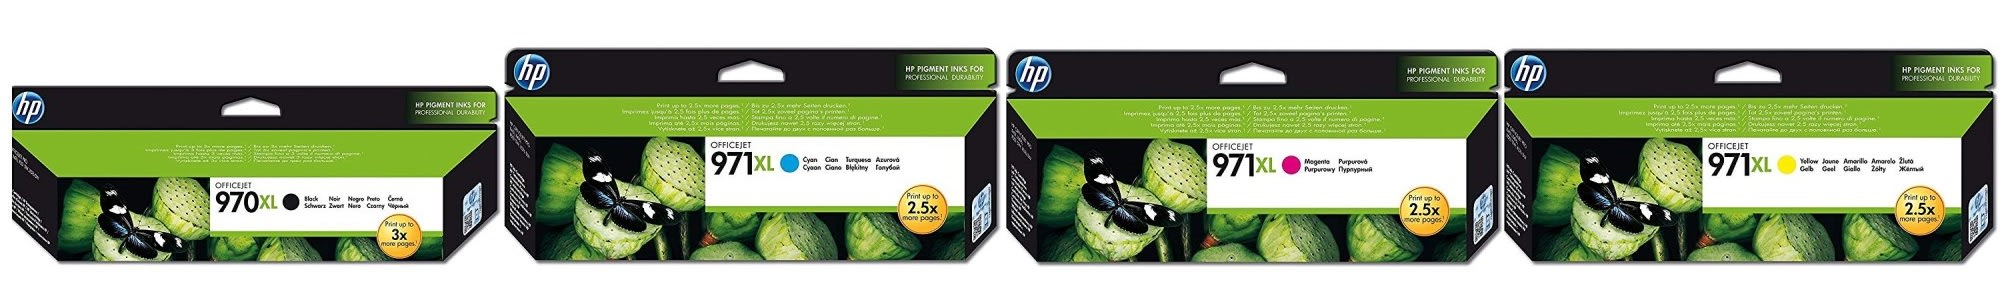 Картриджи hp 970XL hp 971XL для HP OfficeJet Pro X451dw. Купить комплект оригинальных картриджей.